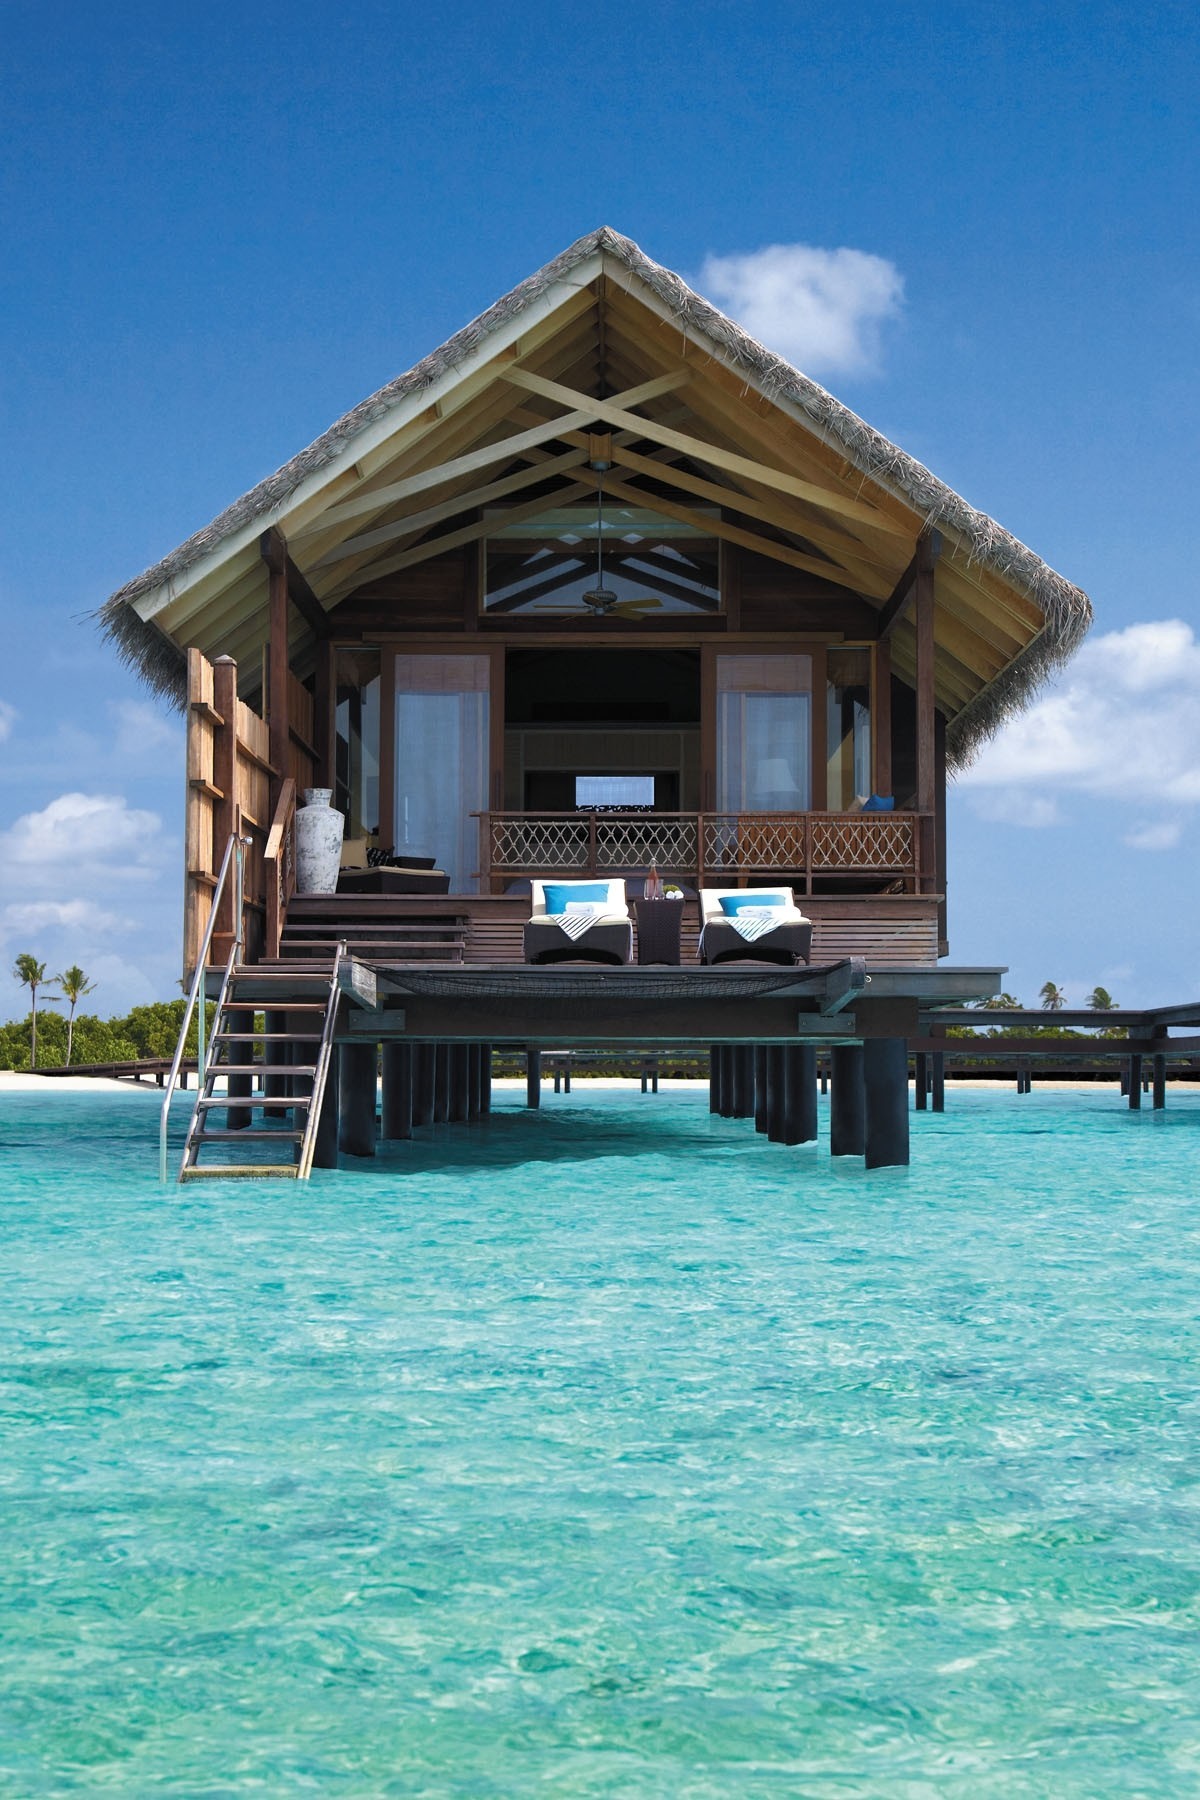 Beach House Wallpaper - Shangri La Maldives - HD Wallpaper 